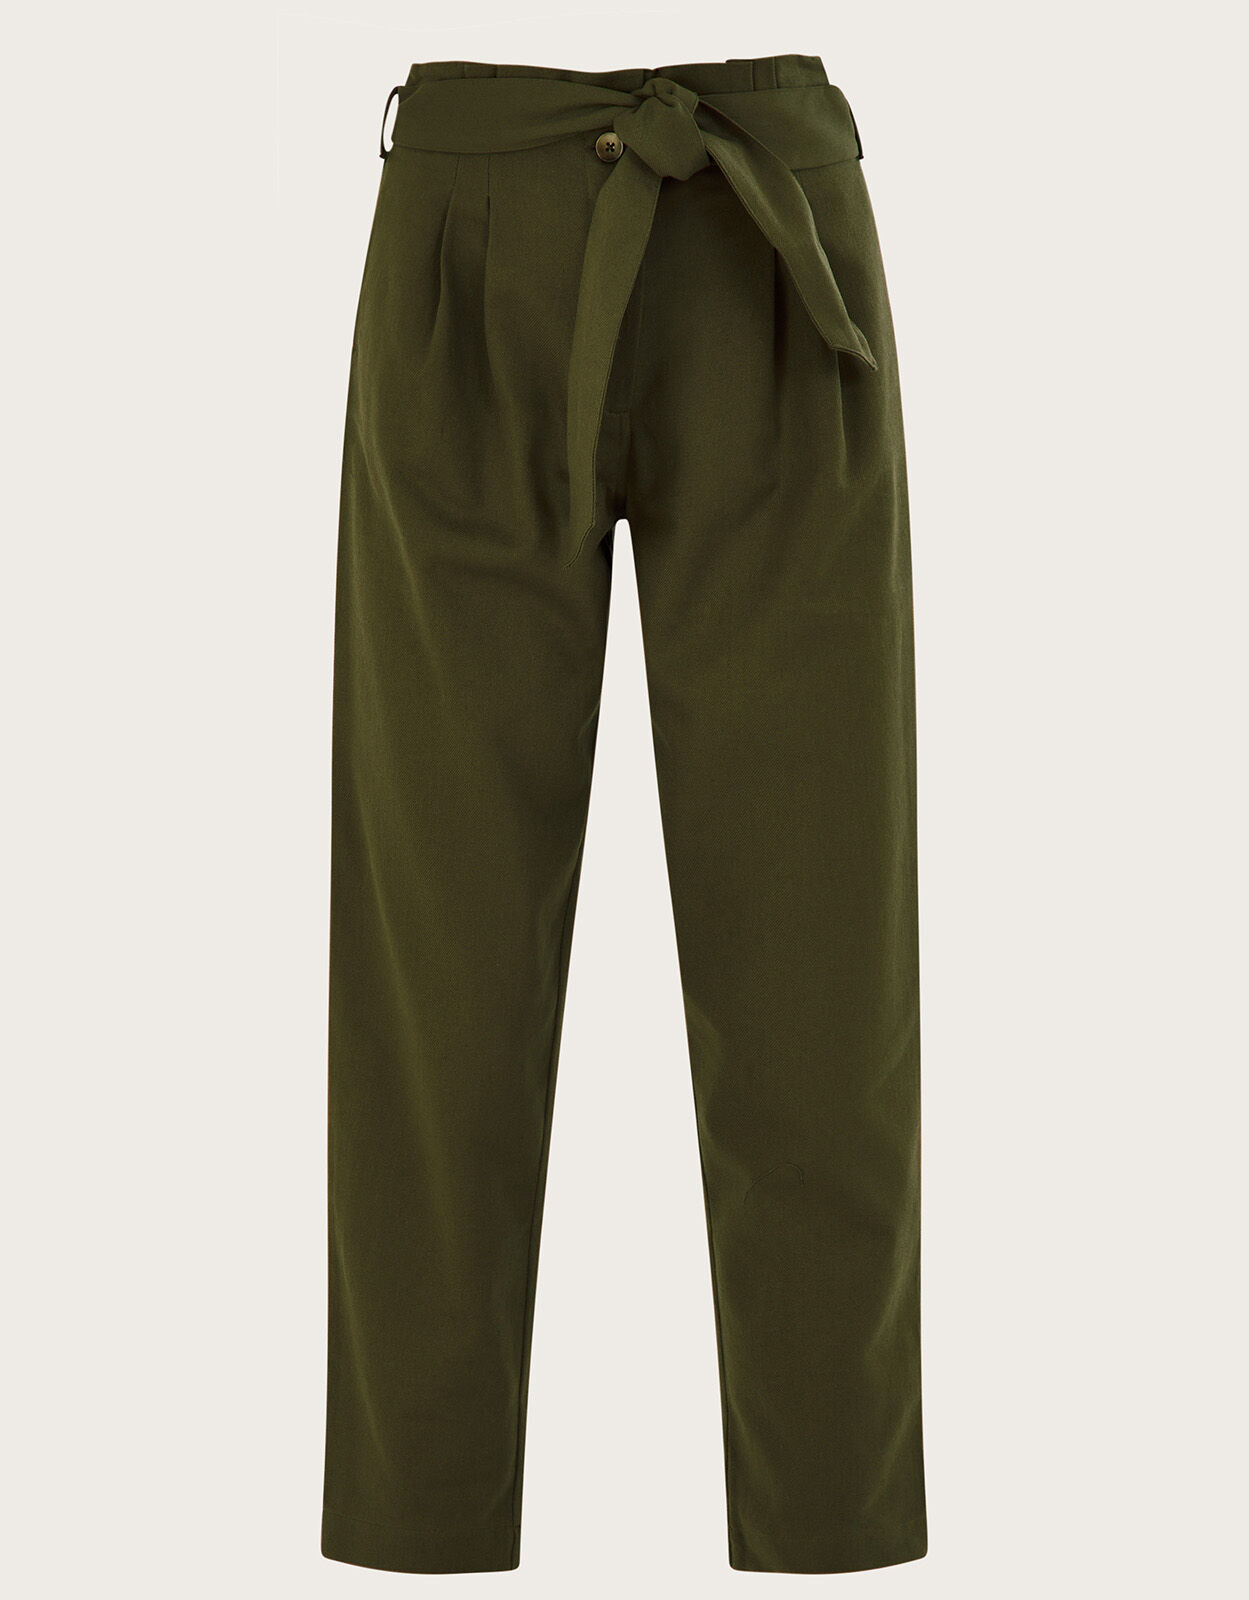 Freeprance Women's Pants Casual Trouser Paper Bag Pants Elastic Waist Slim  Pockets XAG XS Army Green at Amazon Women's Clothing store